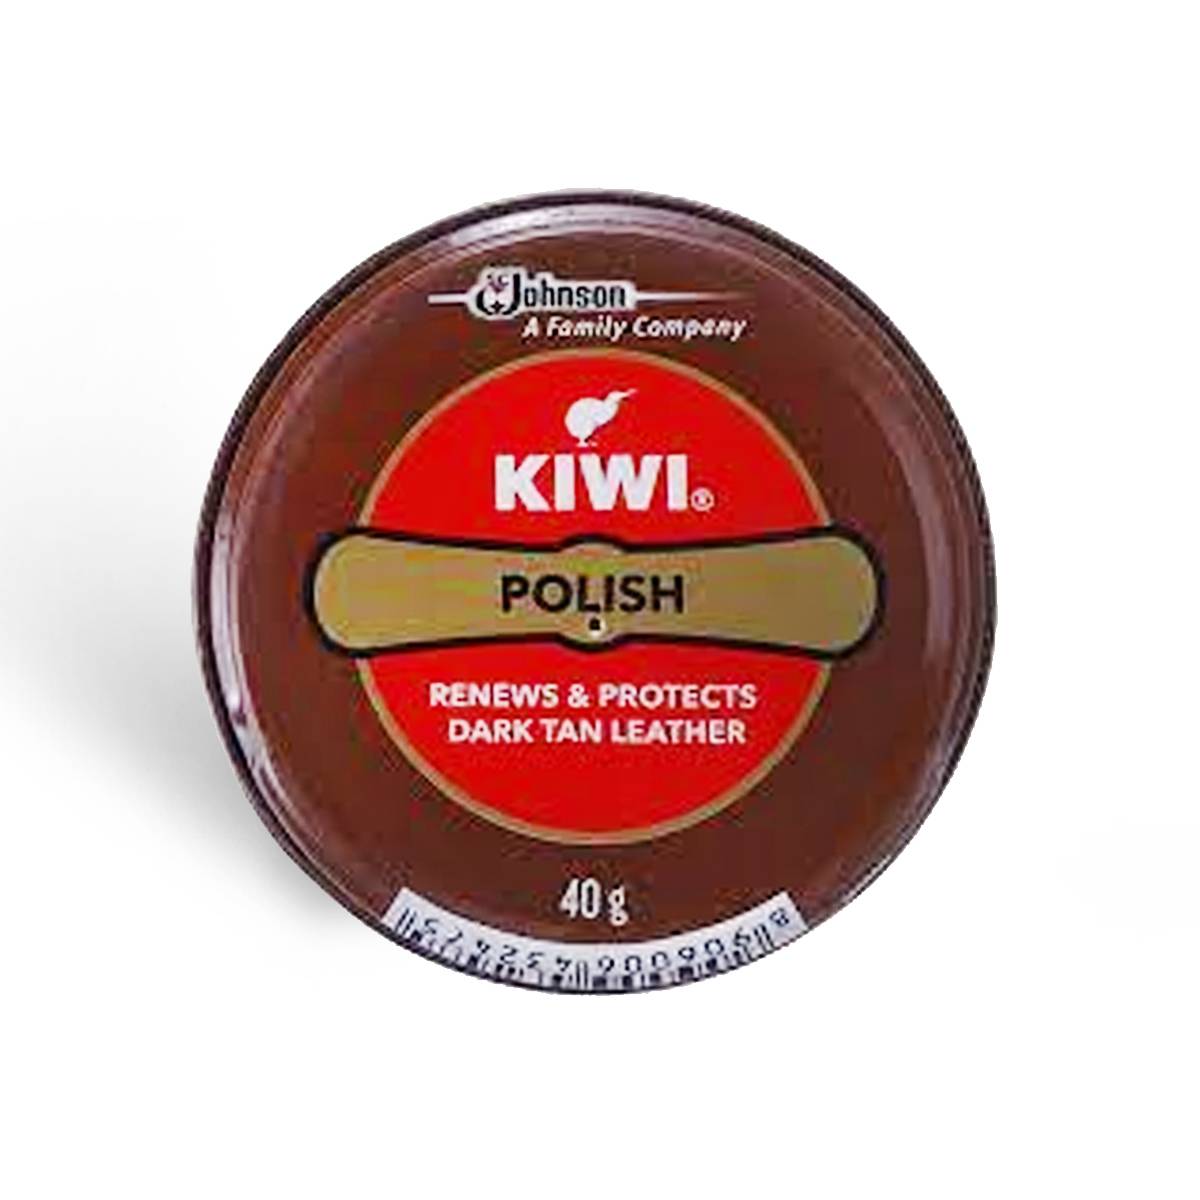 Kiwi Polish Dark Tan Leather 40g